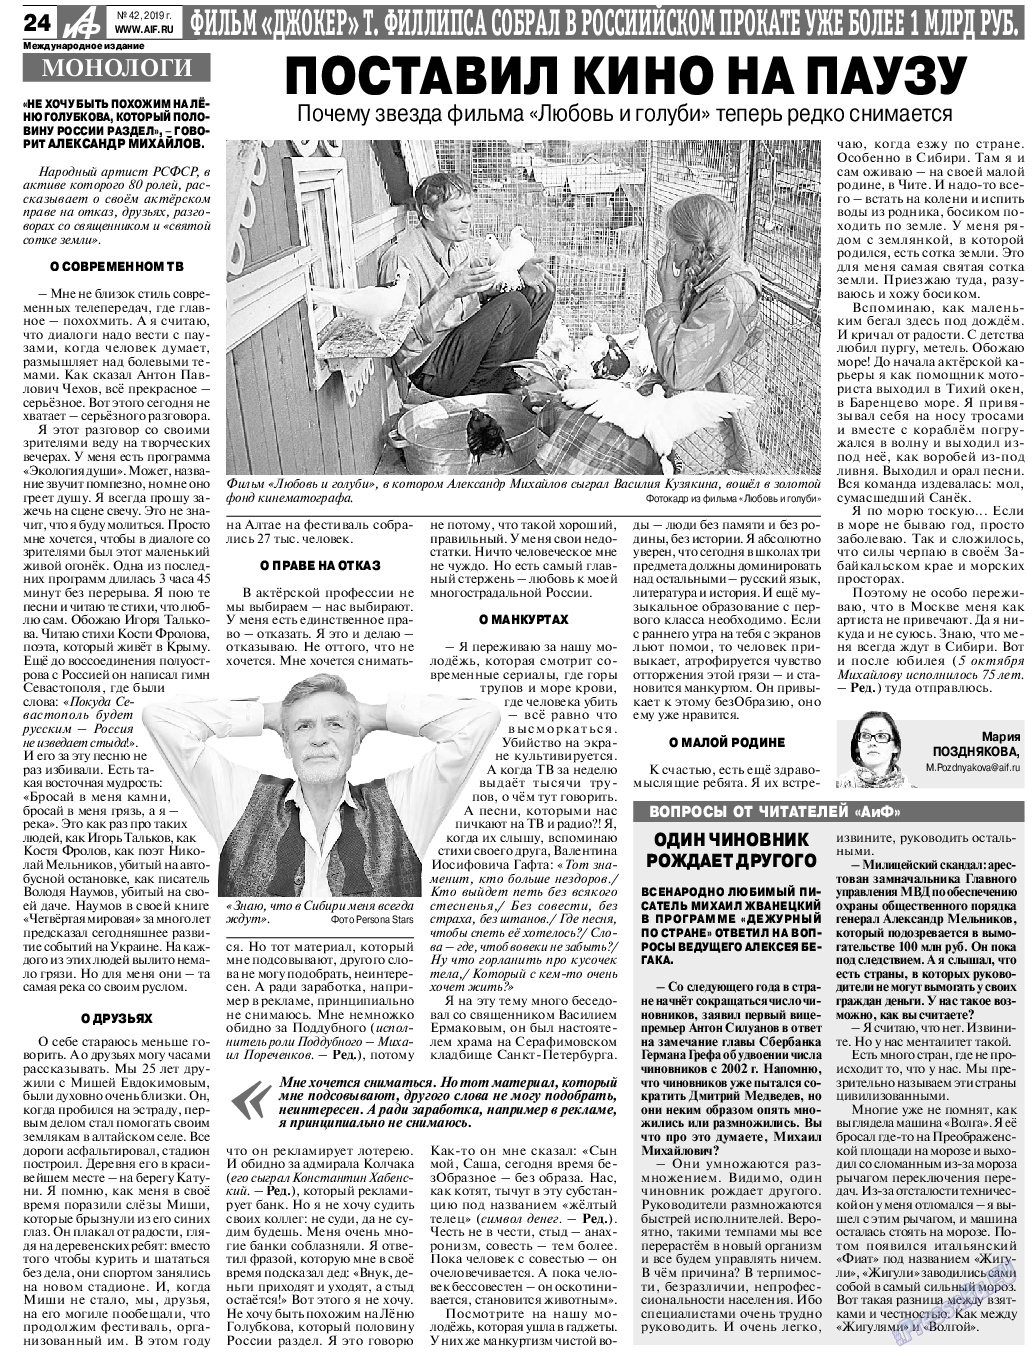 Аргументы и факты Европа, газета. 2019 №42 стр.24